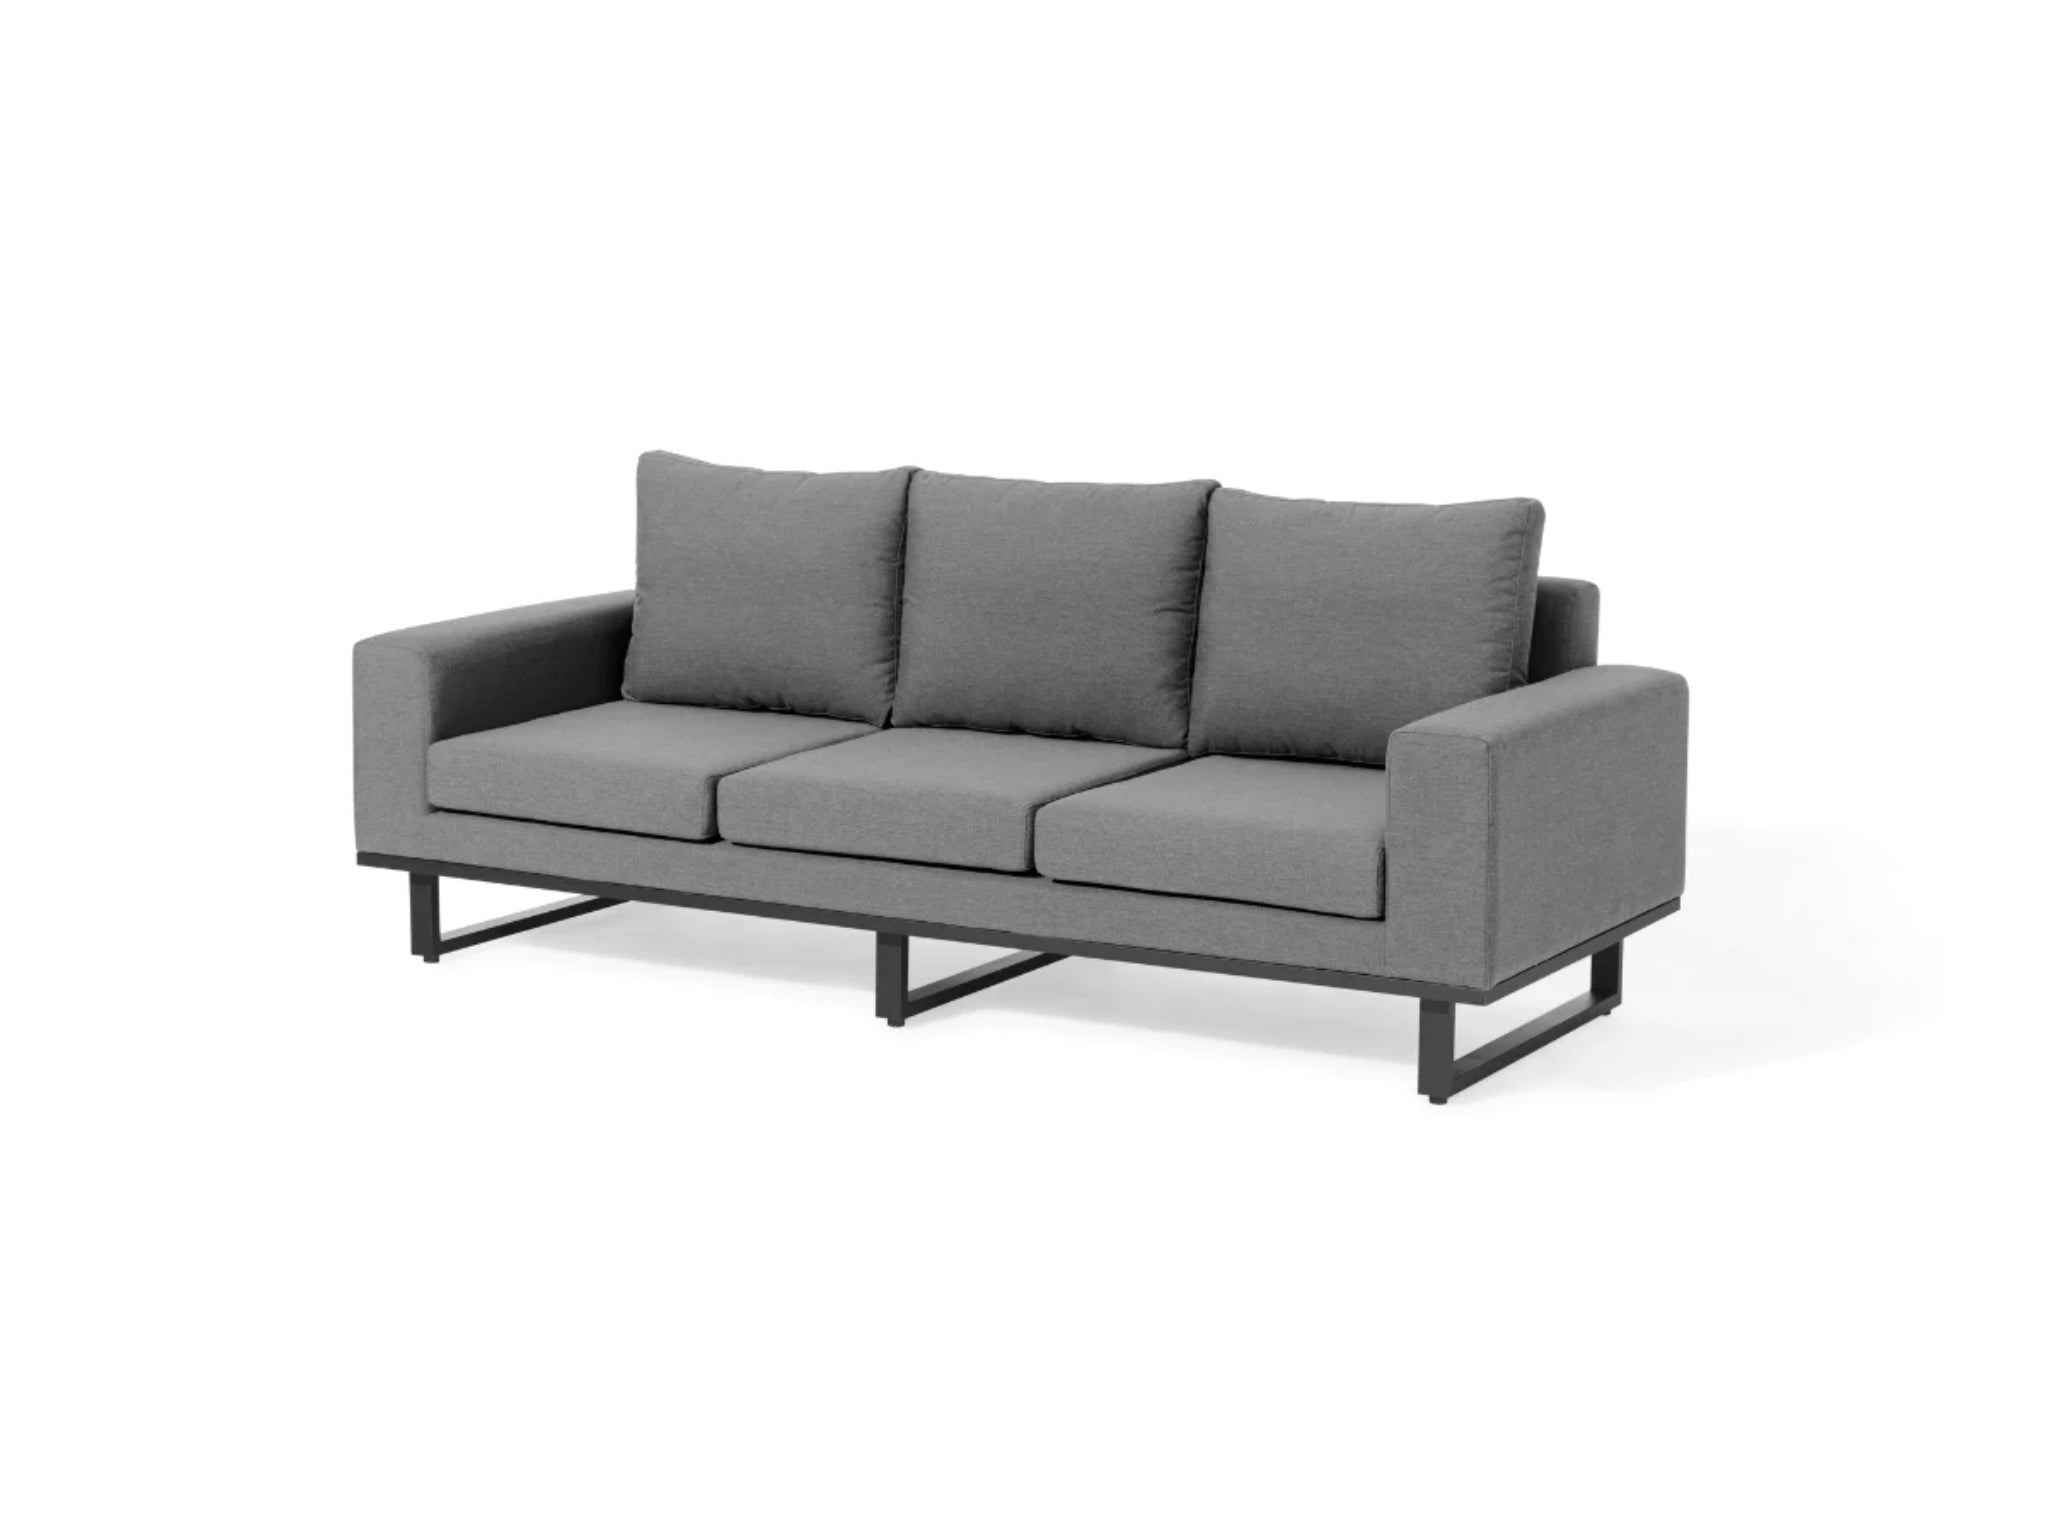 SIMPO by Sunlongarden Ethos 3-Seat Sofa